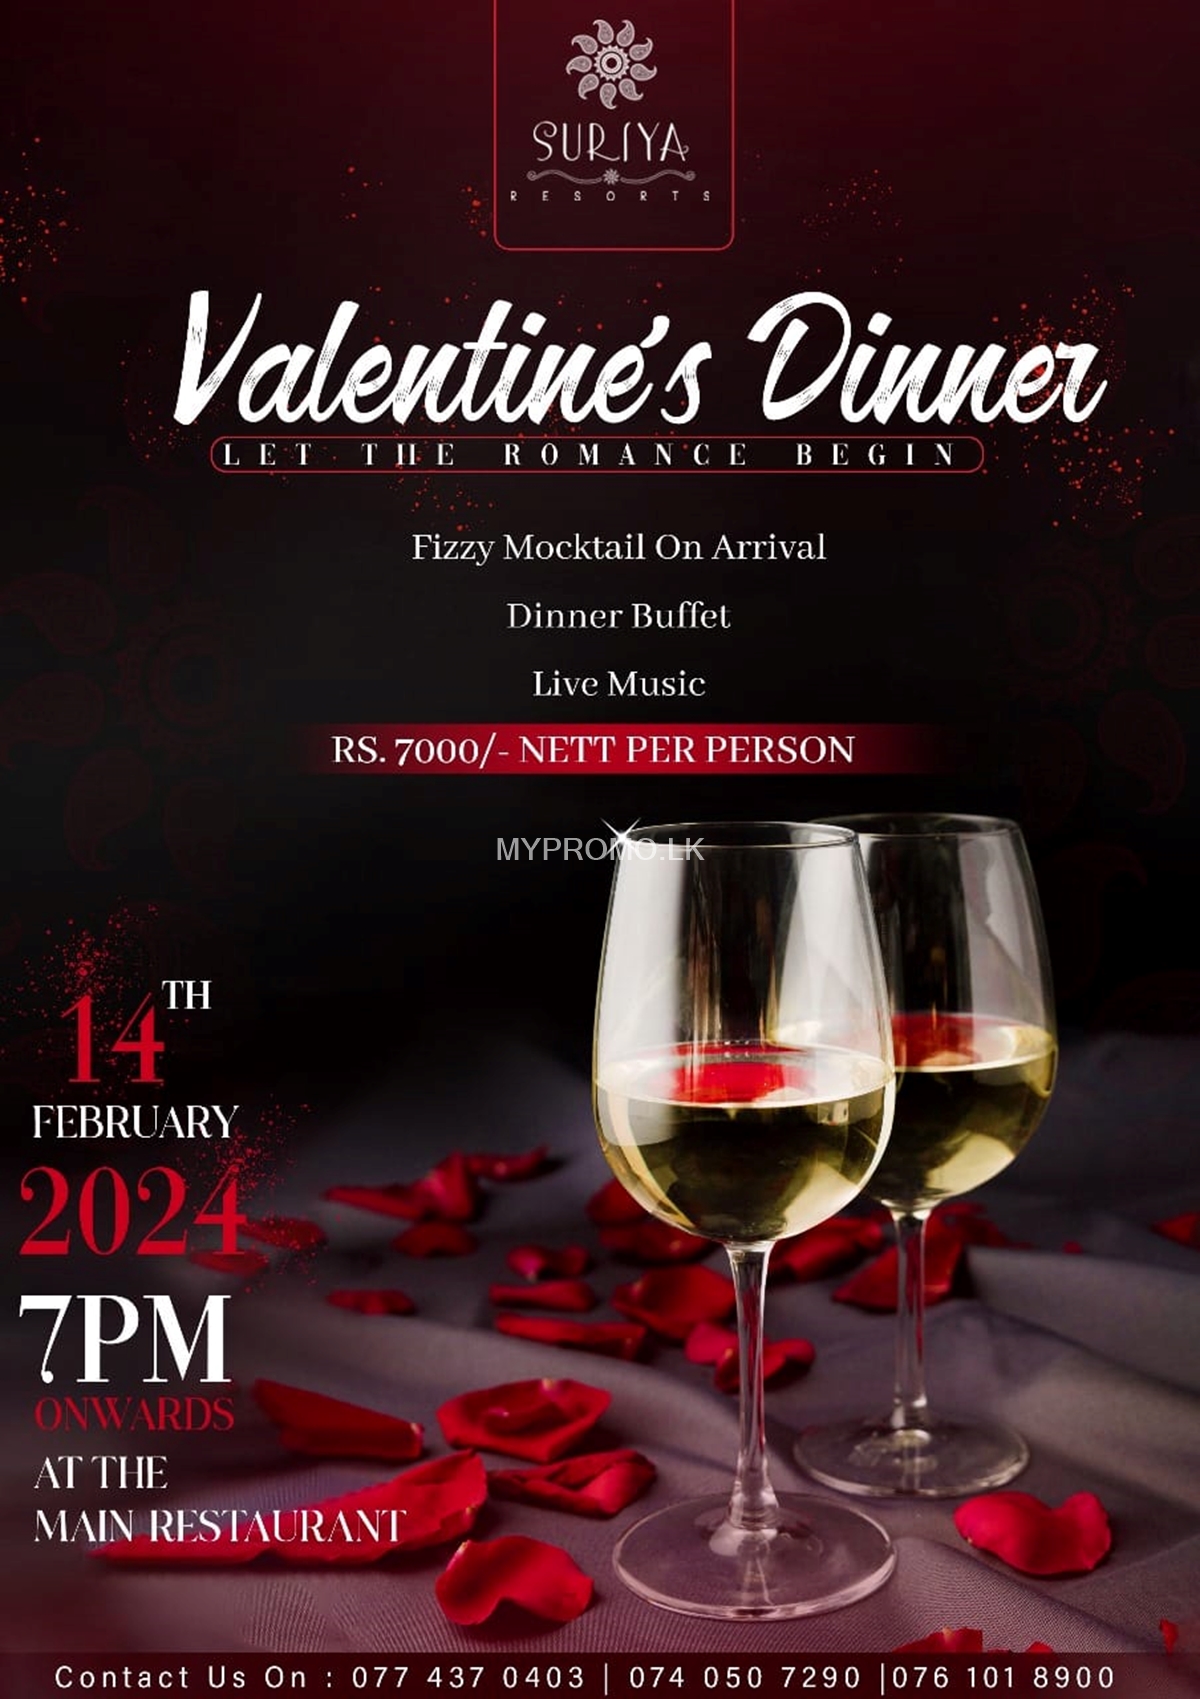 Valentine's dinner at Suriya Resort